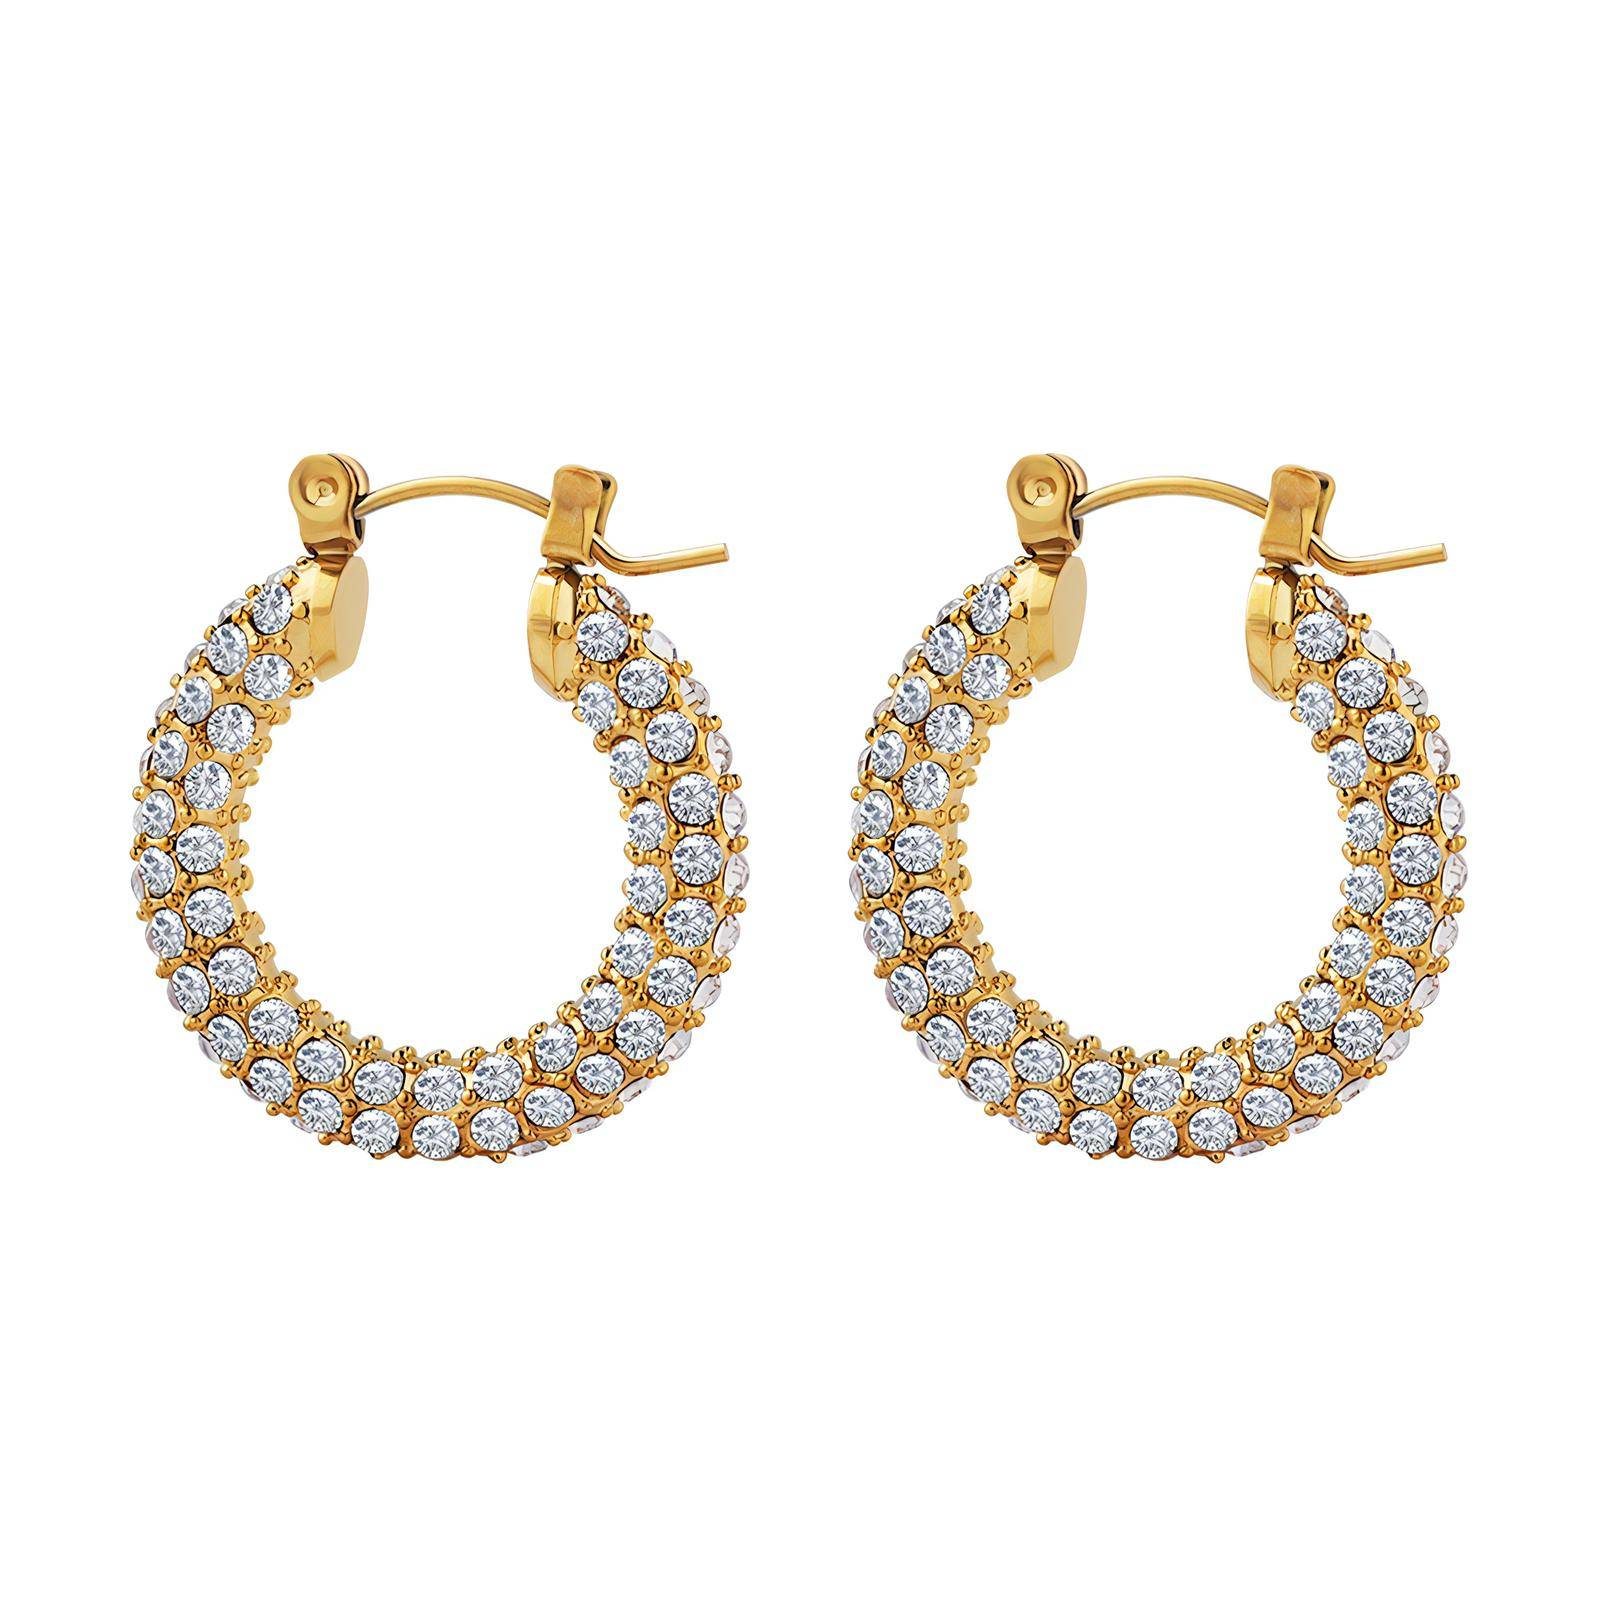 18K gold plated Stainless steel earrings, Intensity SKU #84885-4 ...